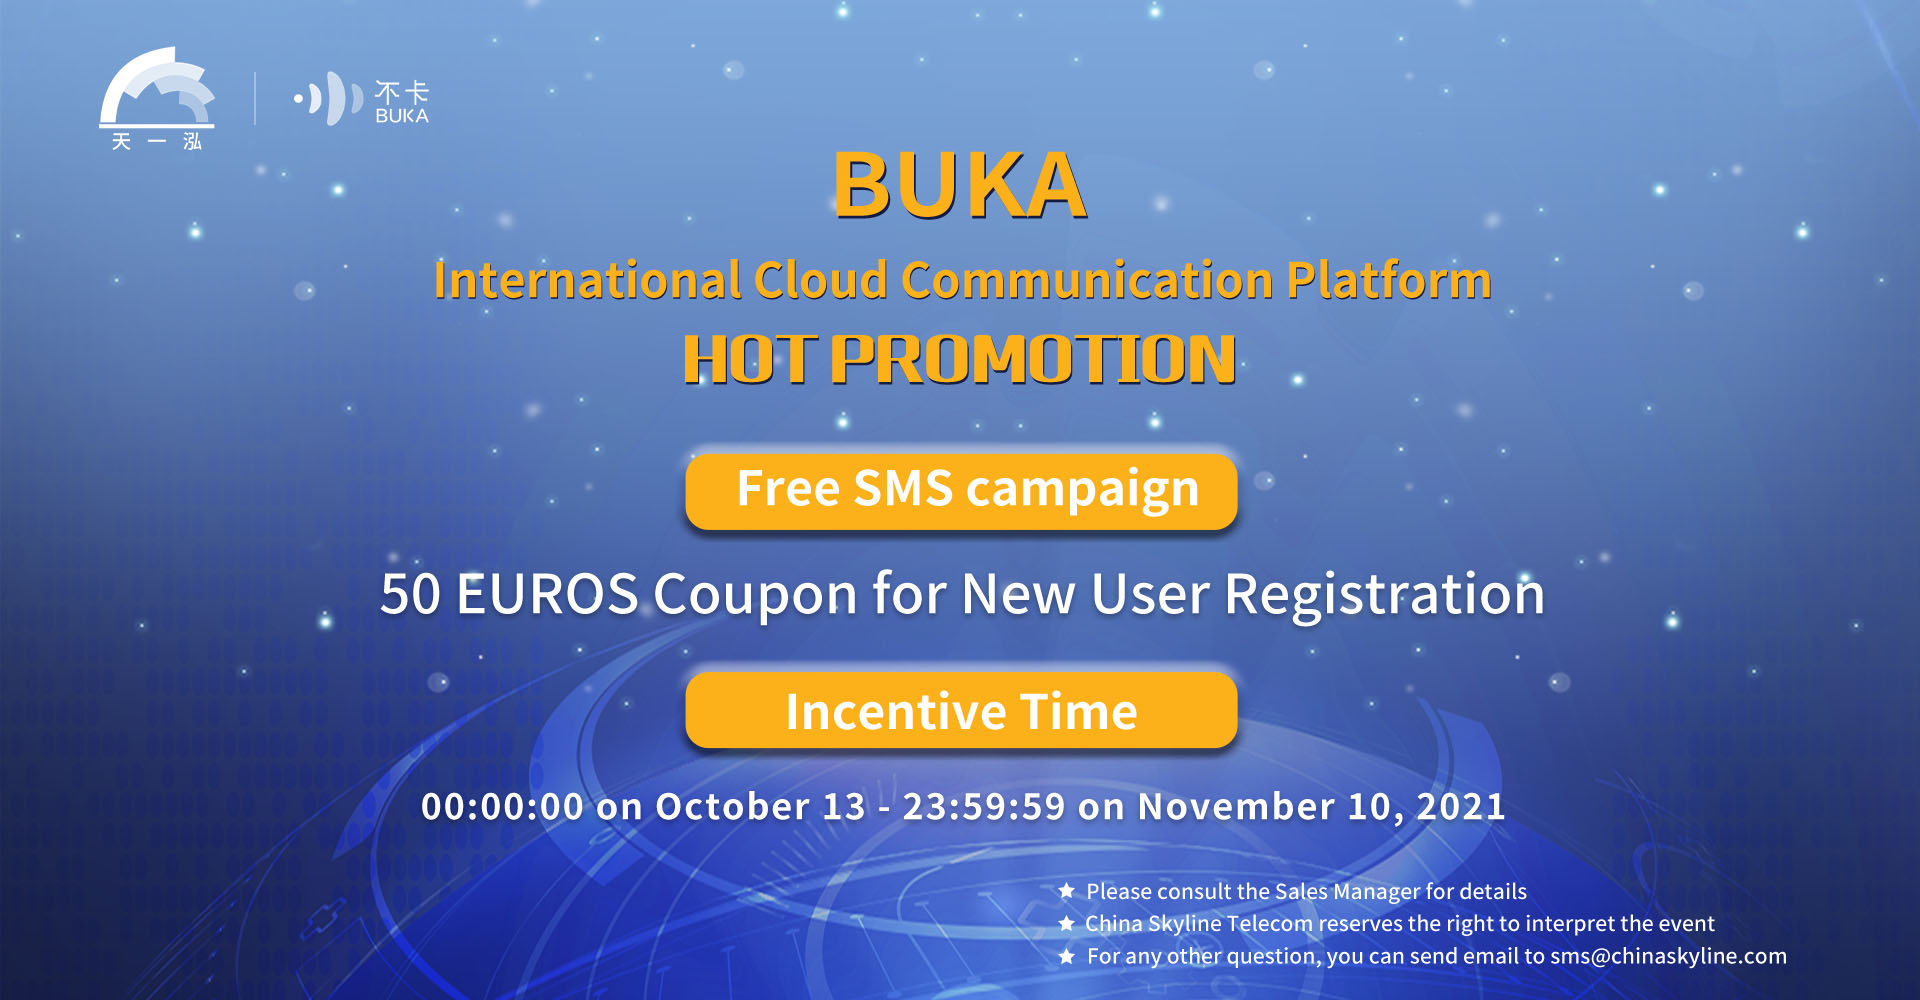 HOT PROMOTION ----- BUKA International Cloud Communication Platform